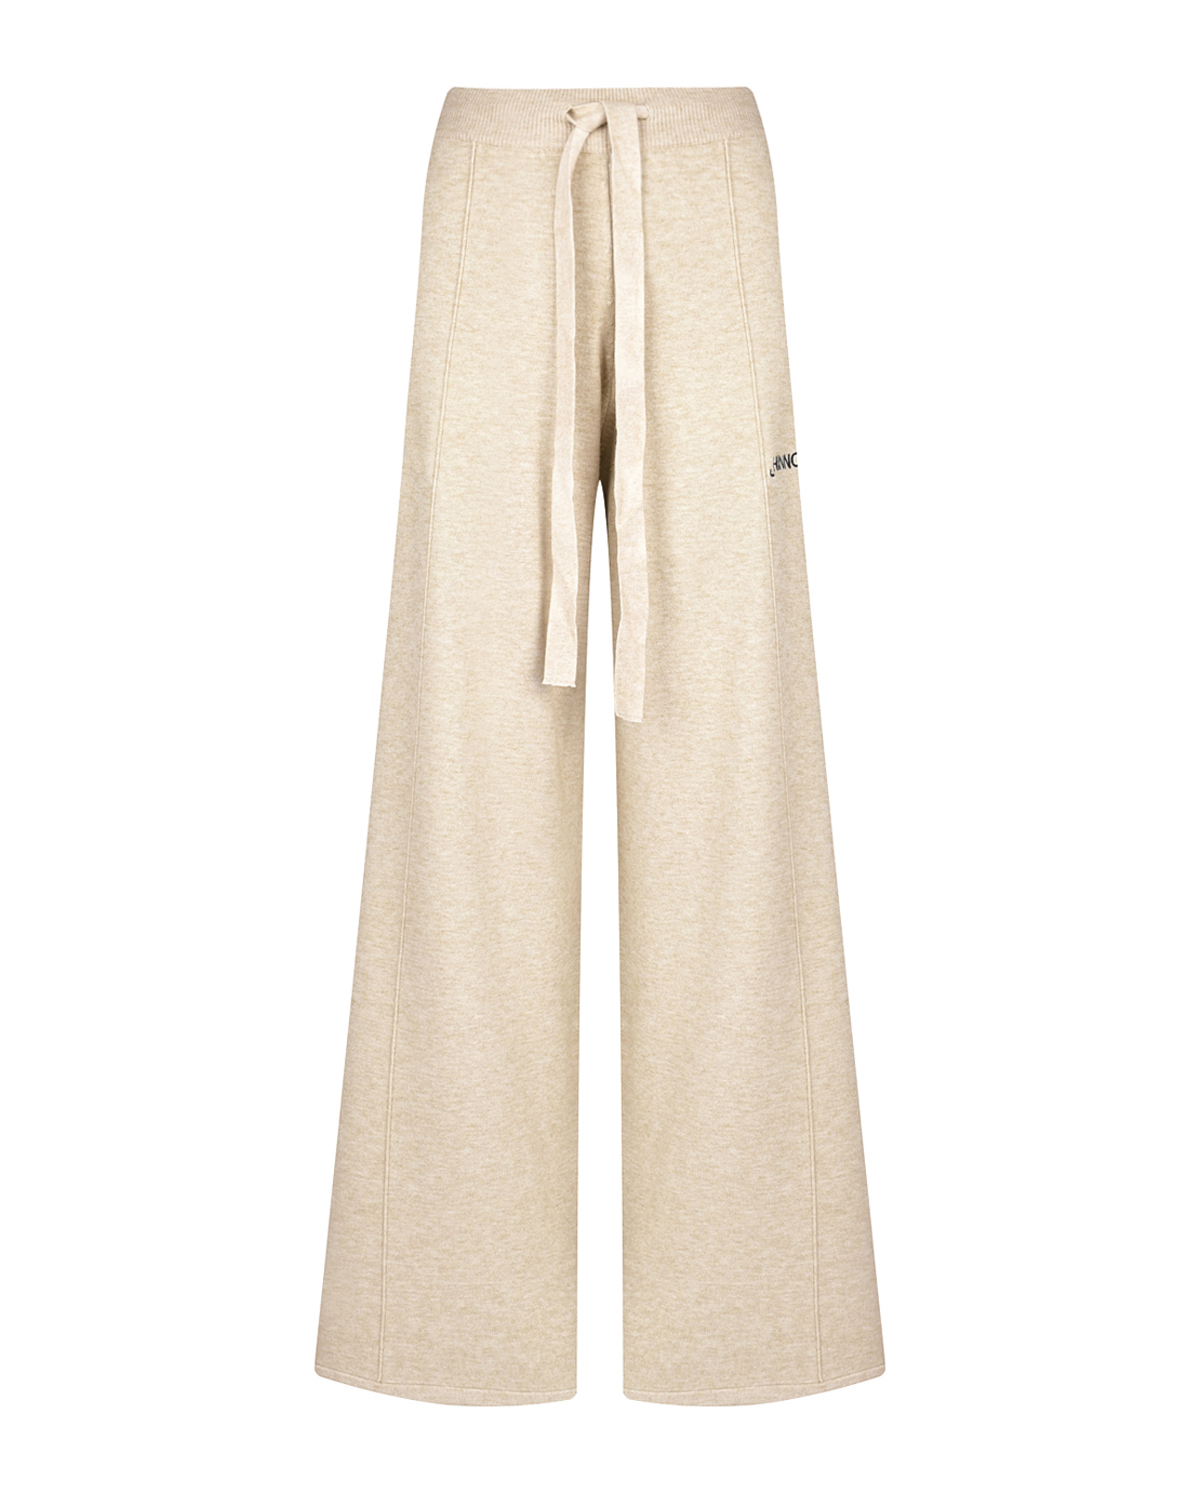 Бежевые брюки палаццо Hinnominate, размер 40, цвет бежевый - фото 1